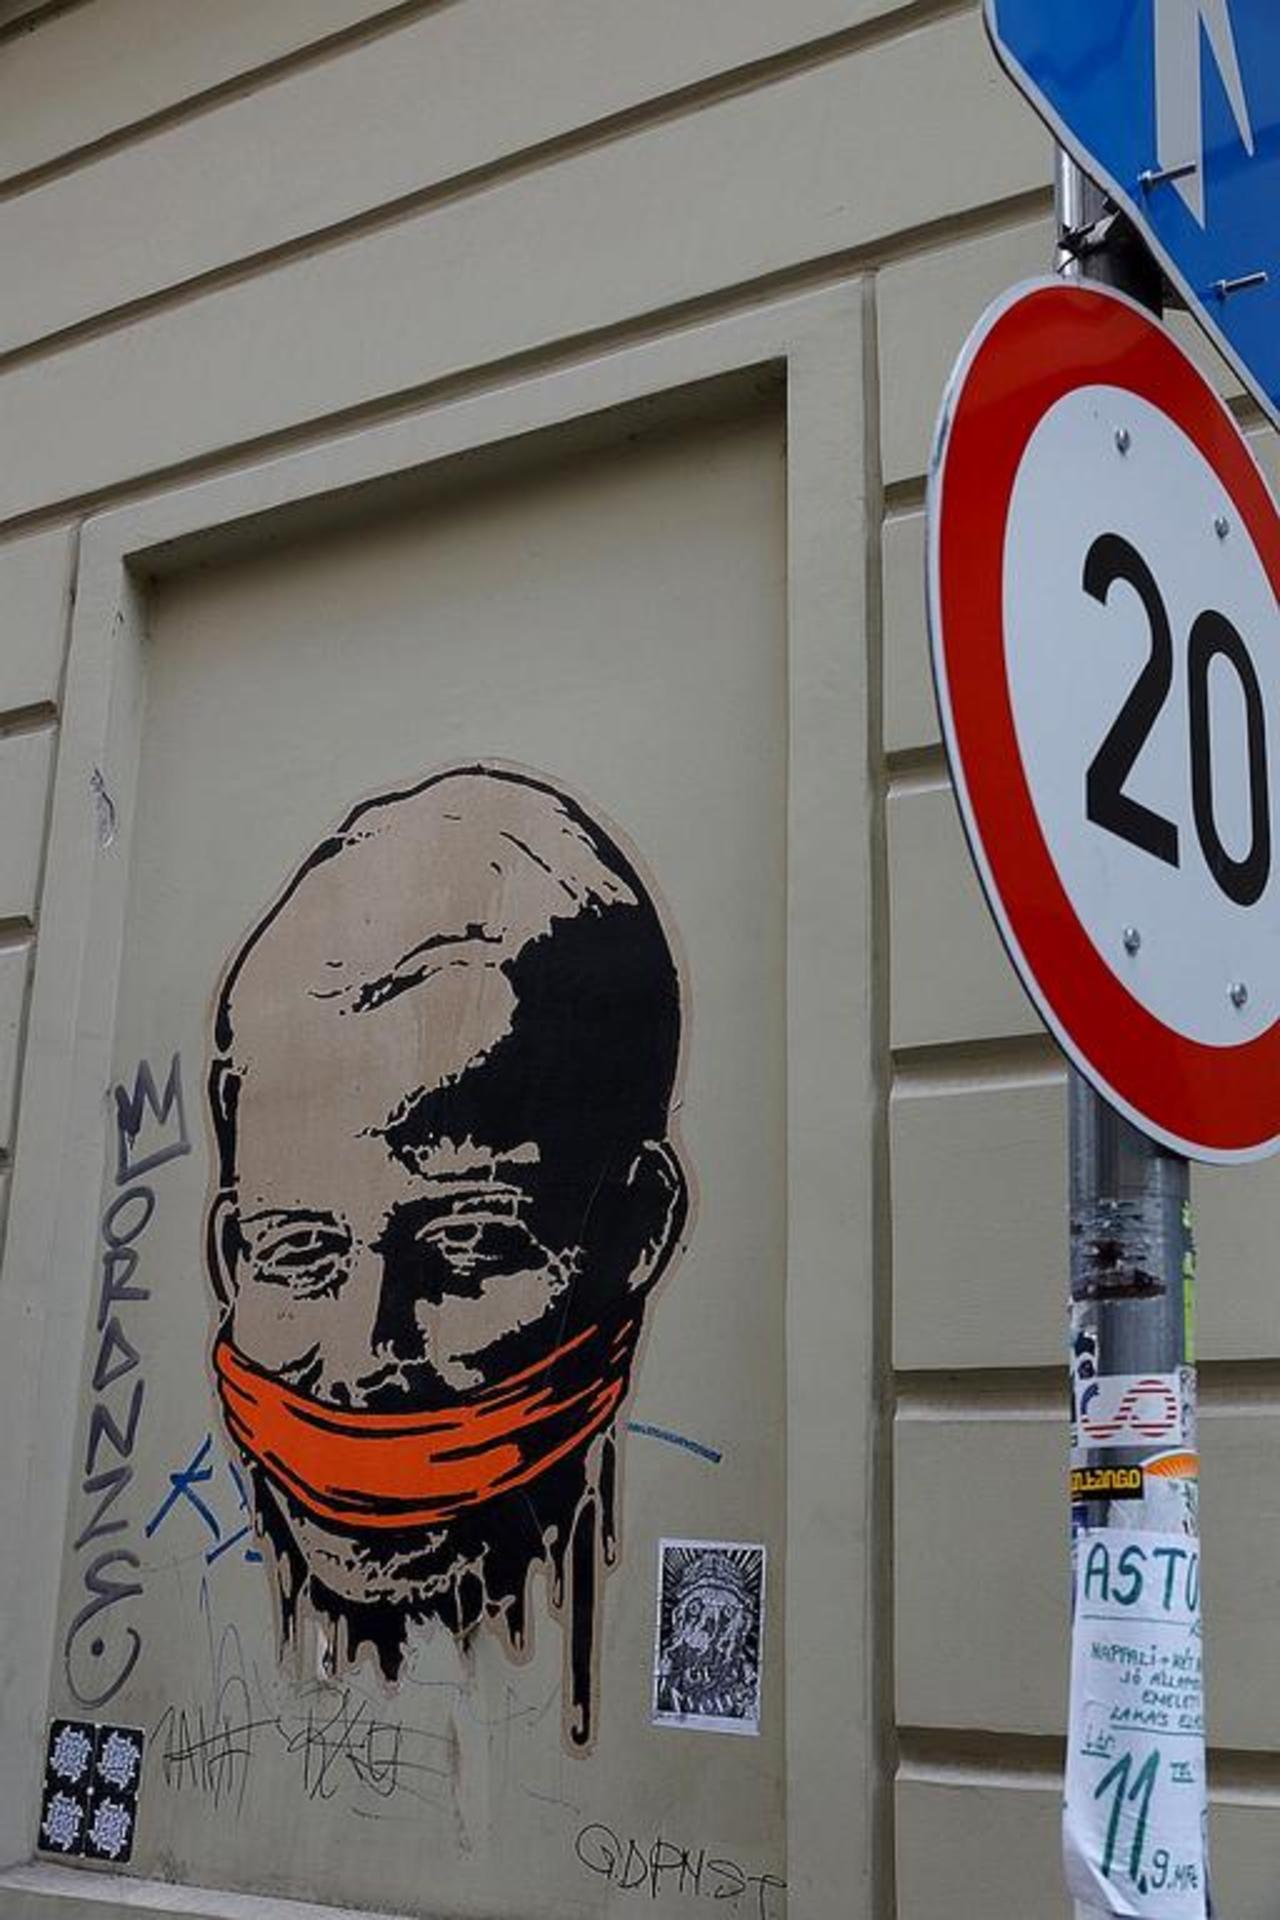 Street Art by anonymous in #Budapest http://www.urbacolors.com #art #mural #graffiti #streetart http://t.co/daE0MpOn4x